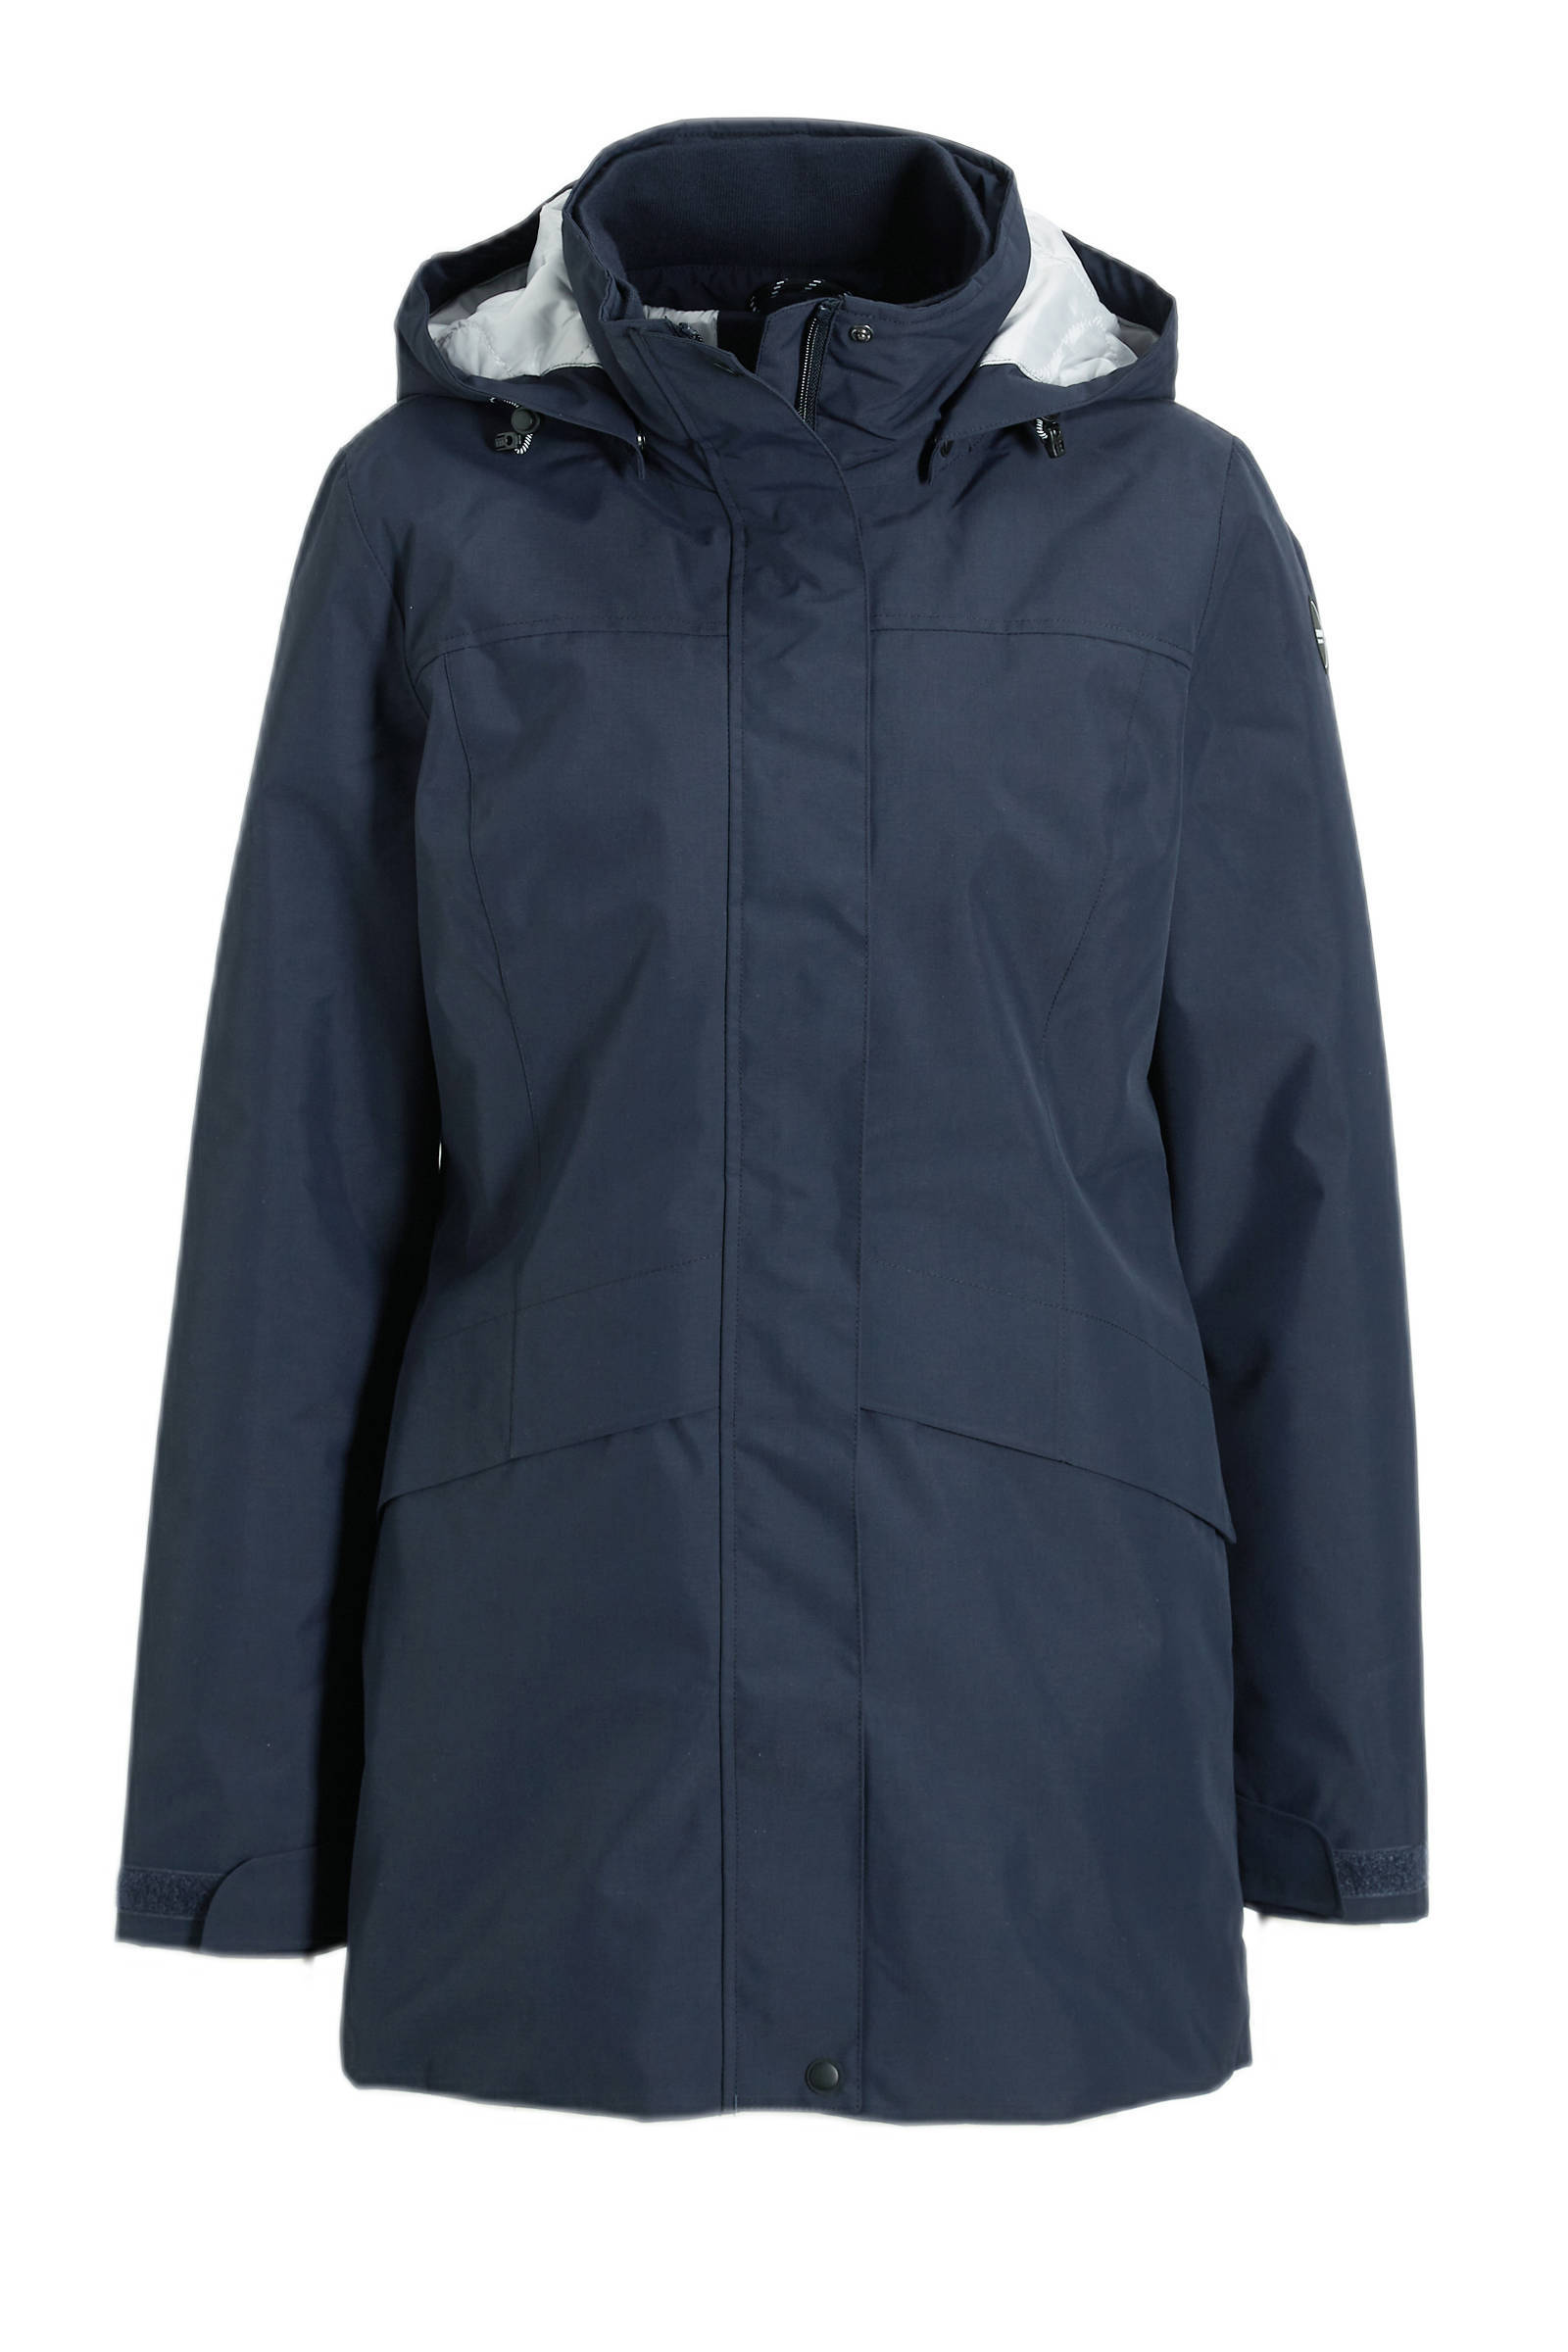 Icepeak outdoor jas Ep Azalia donkerblauw online kopen